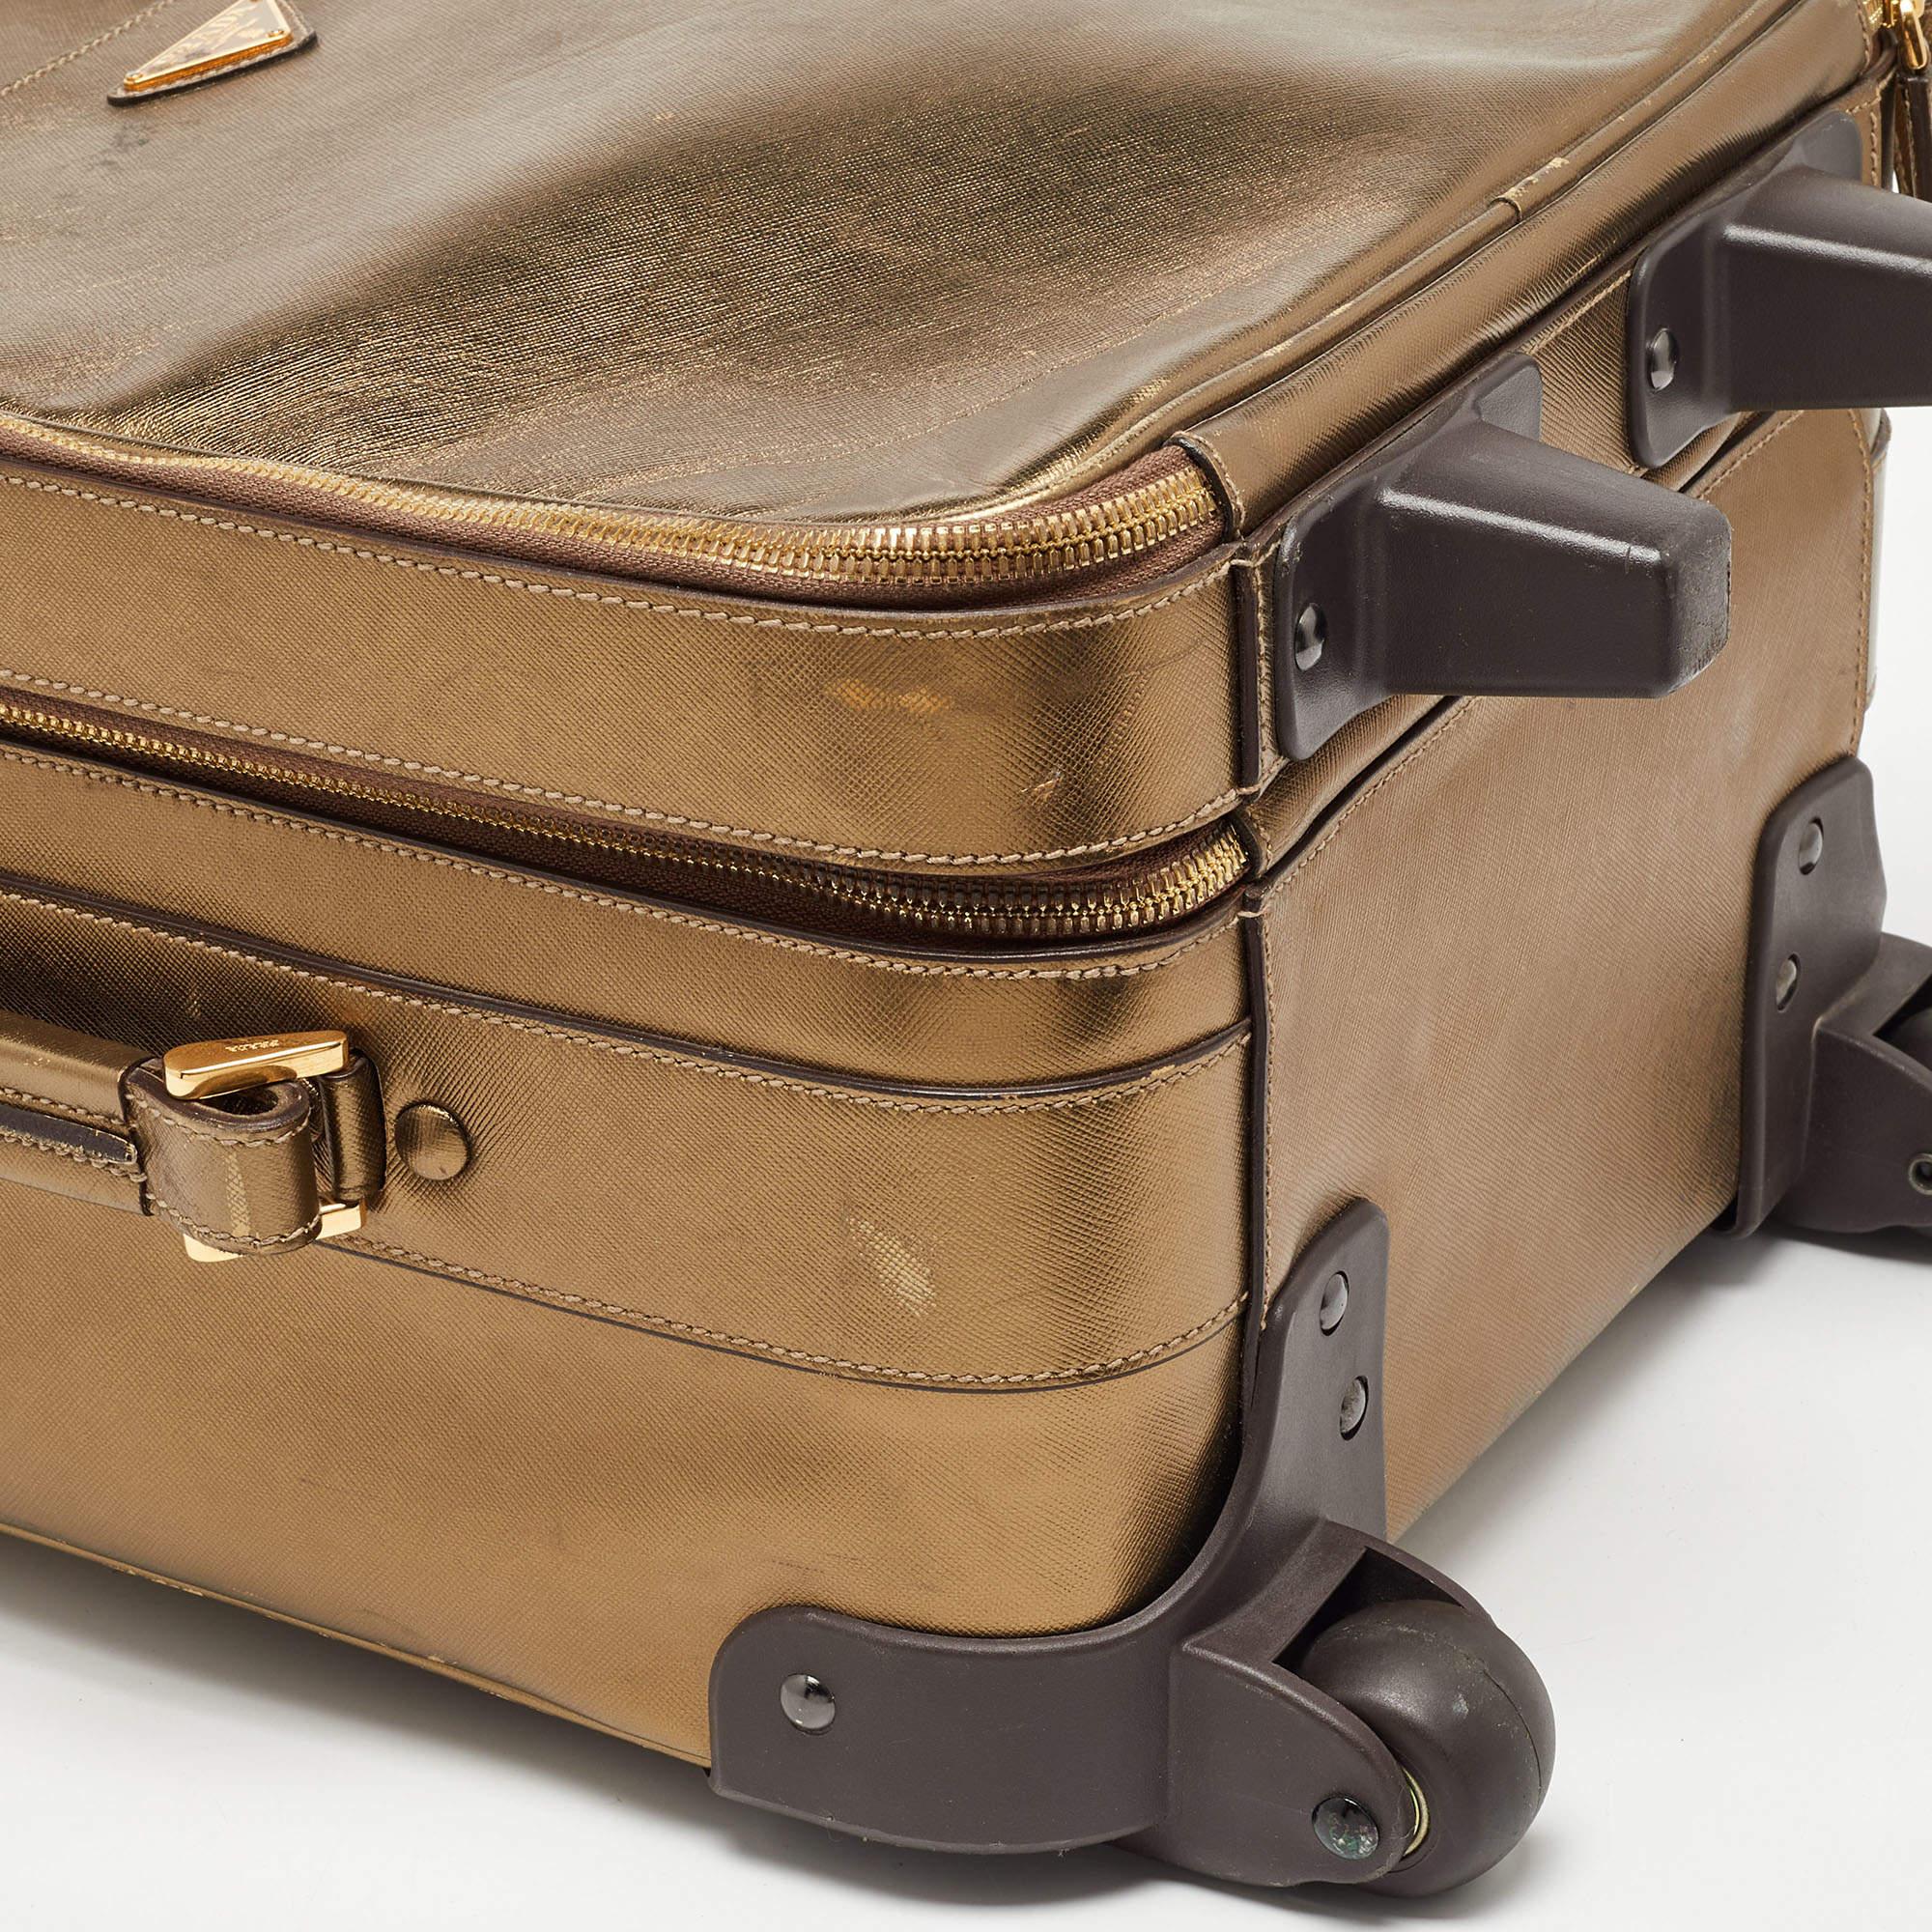 Prada Metallic Gold Saffiano Leather Travel Rolling Trolley Luggage For Sale 5